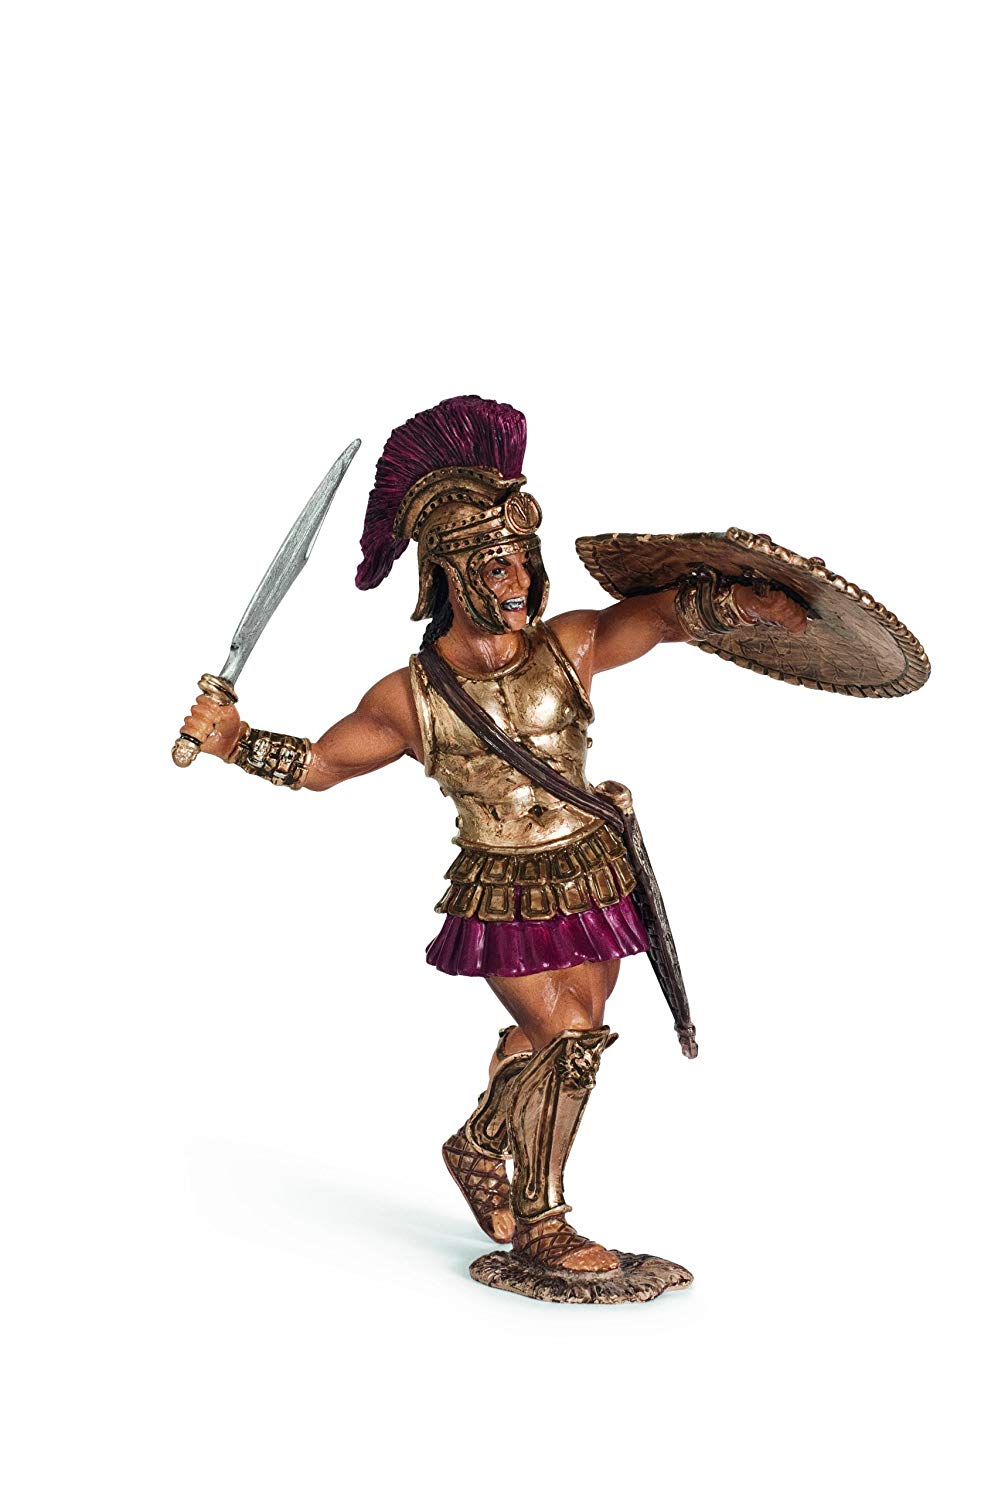 The Fearless Roman Figure